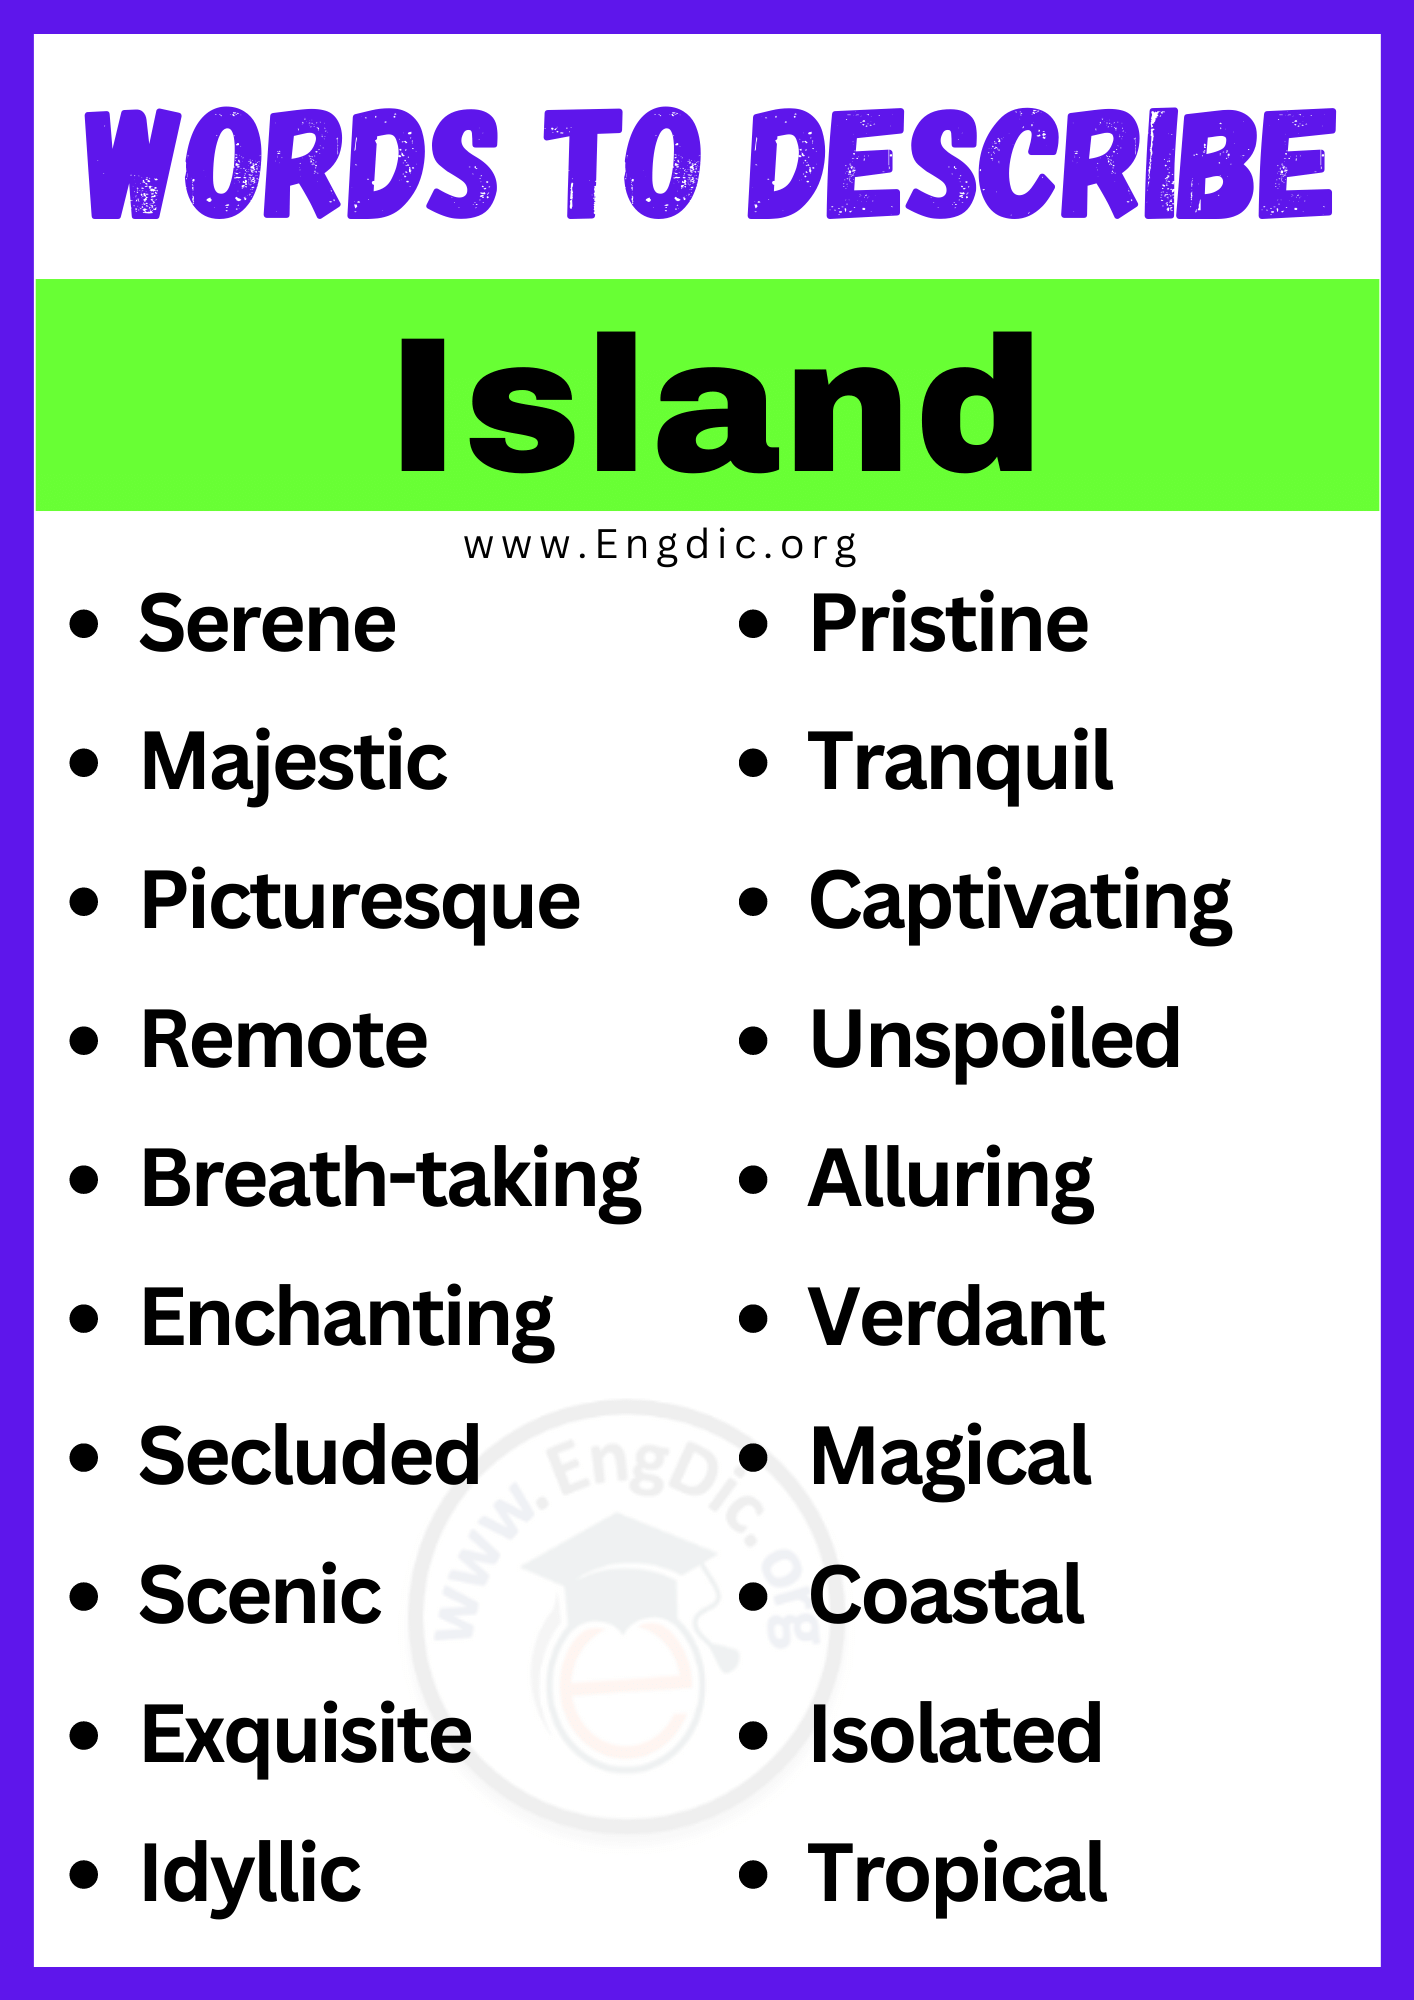 Words to Describe Island